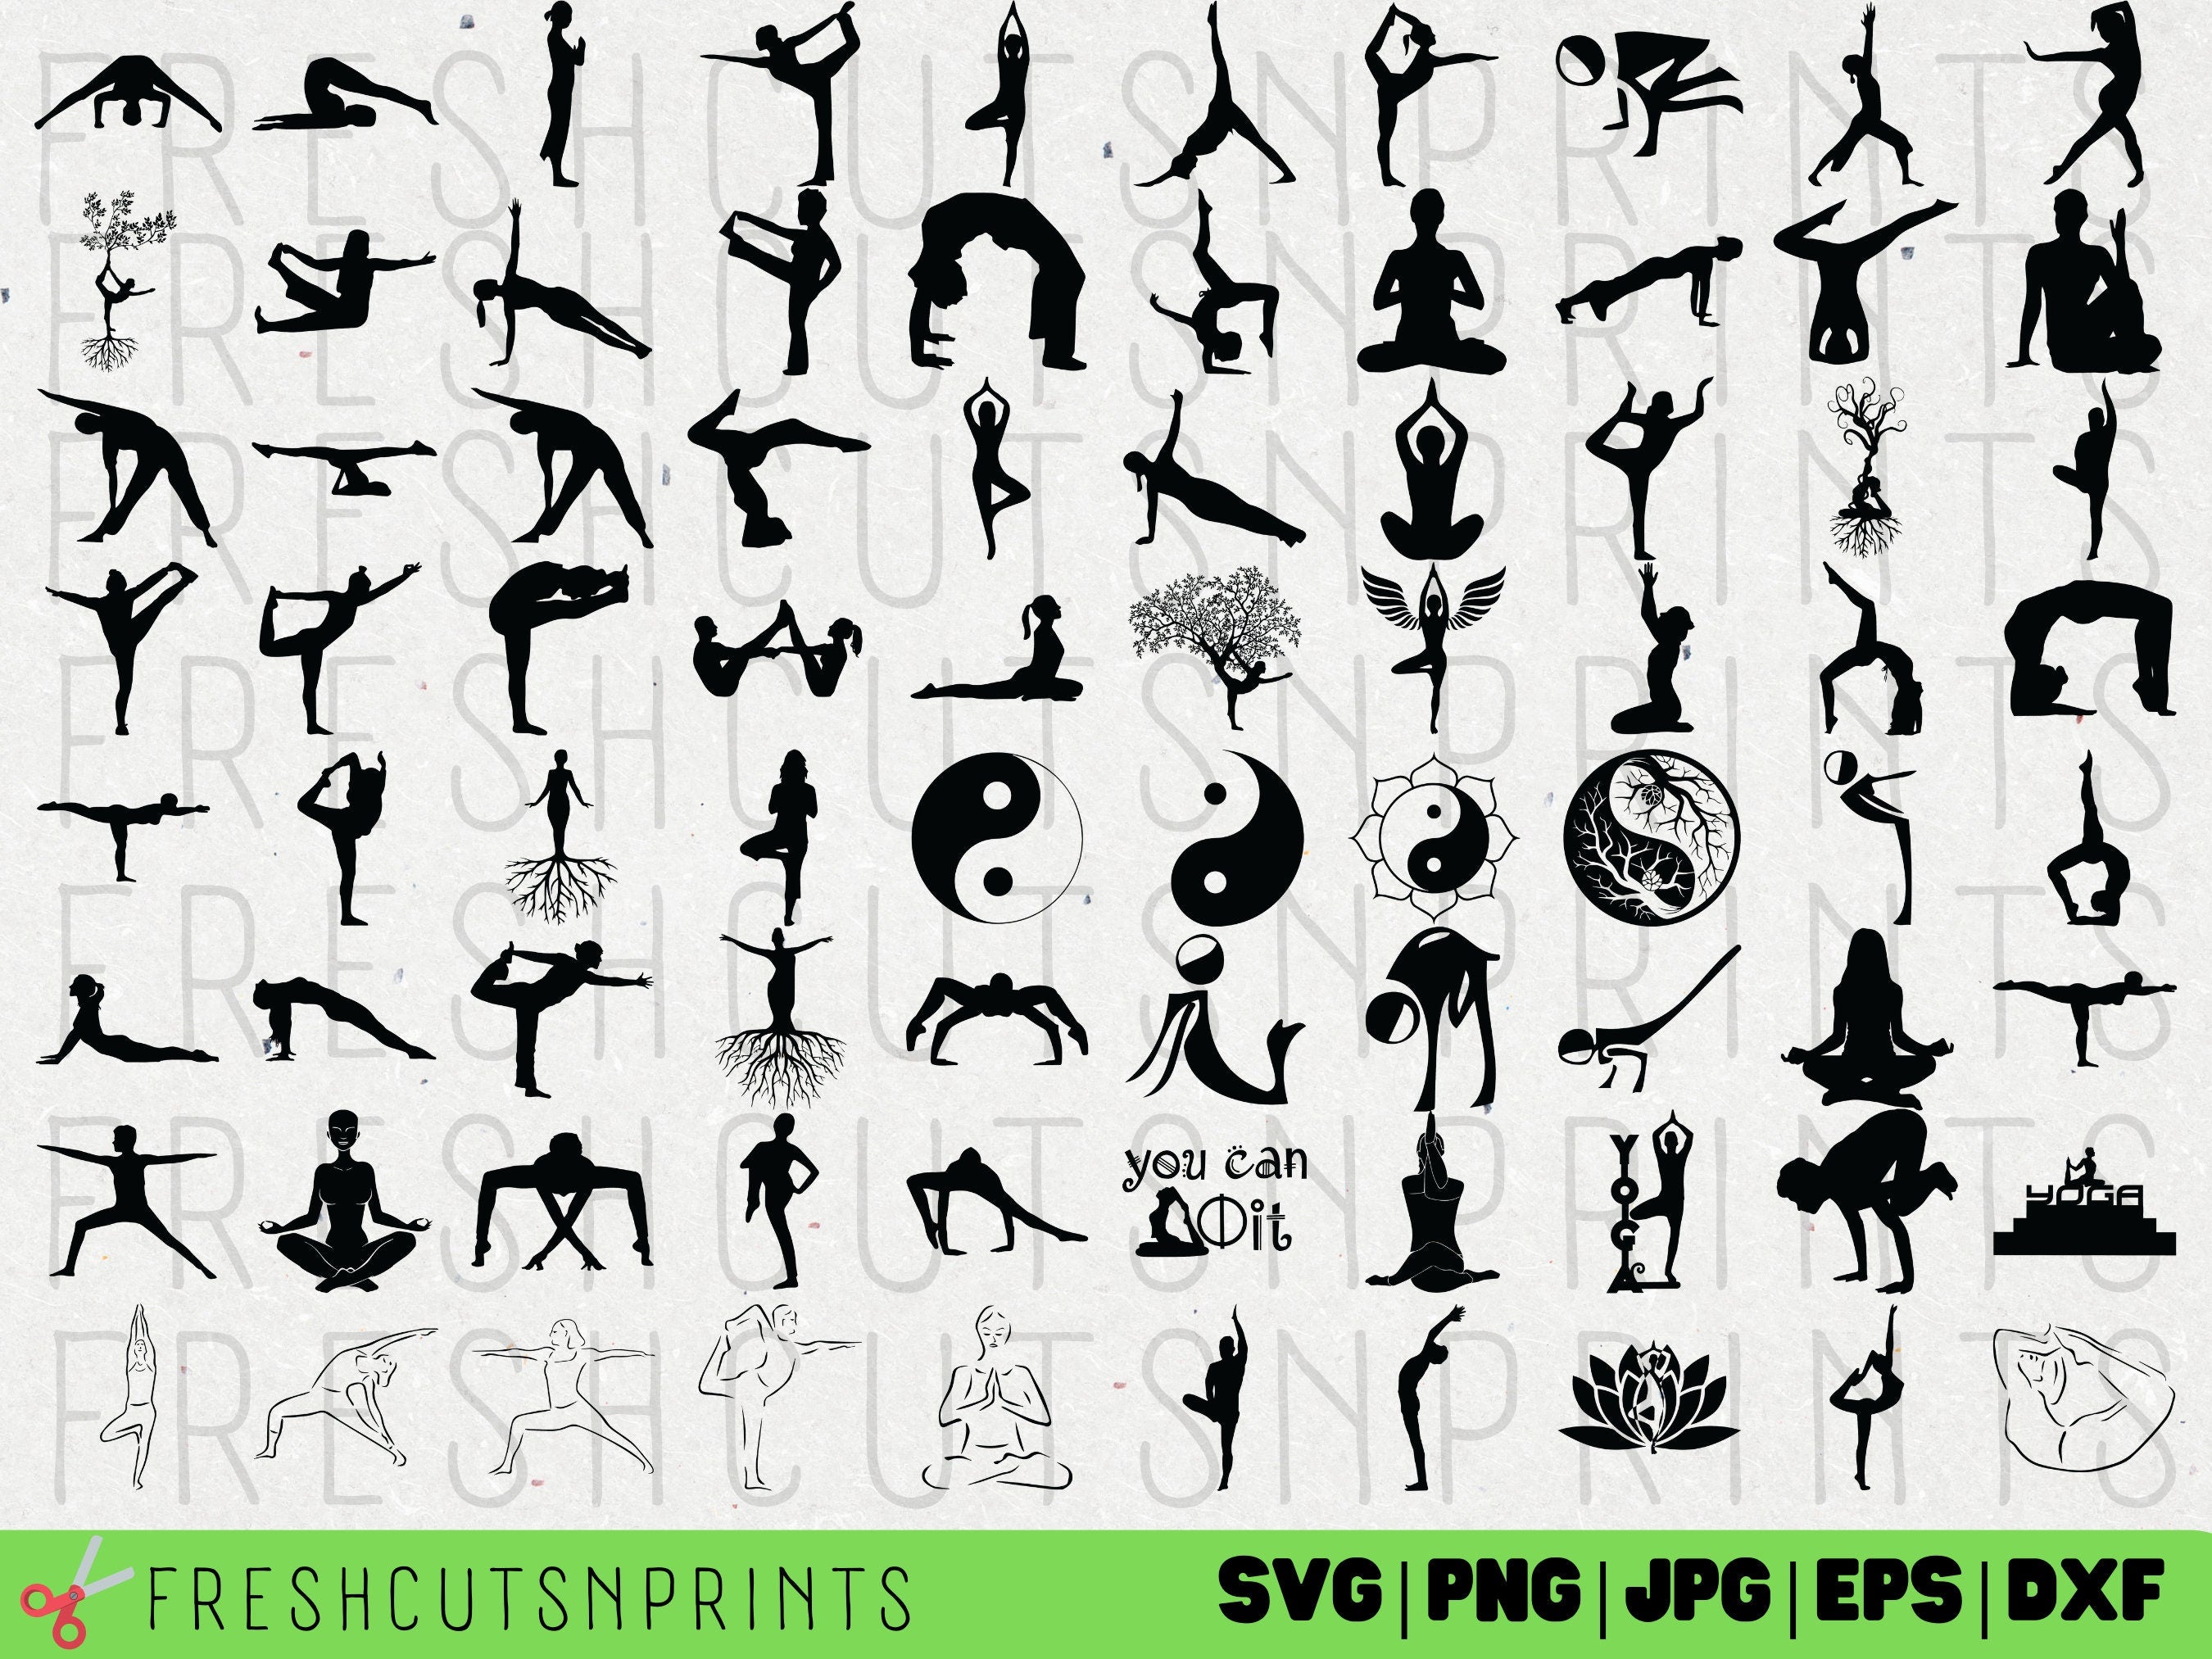 Bridge Pose Yoga Vector PNG Images, Advances Yoga Poses Vector, Yoga, Yoga  Day, Yoga Pose PNG Image For Free Download